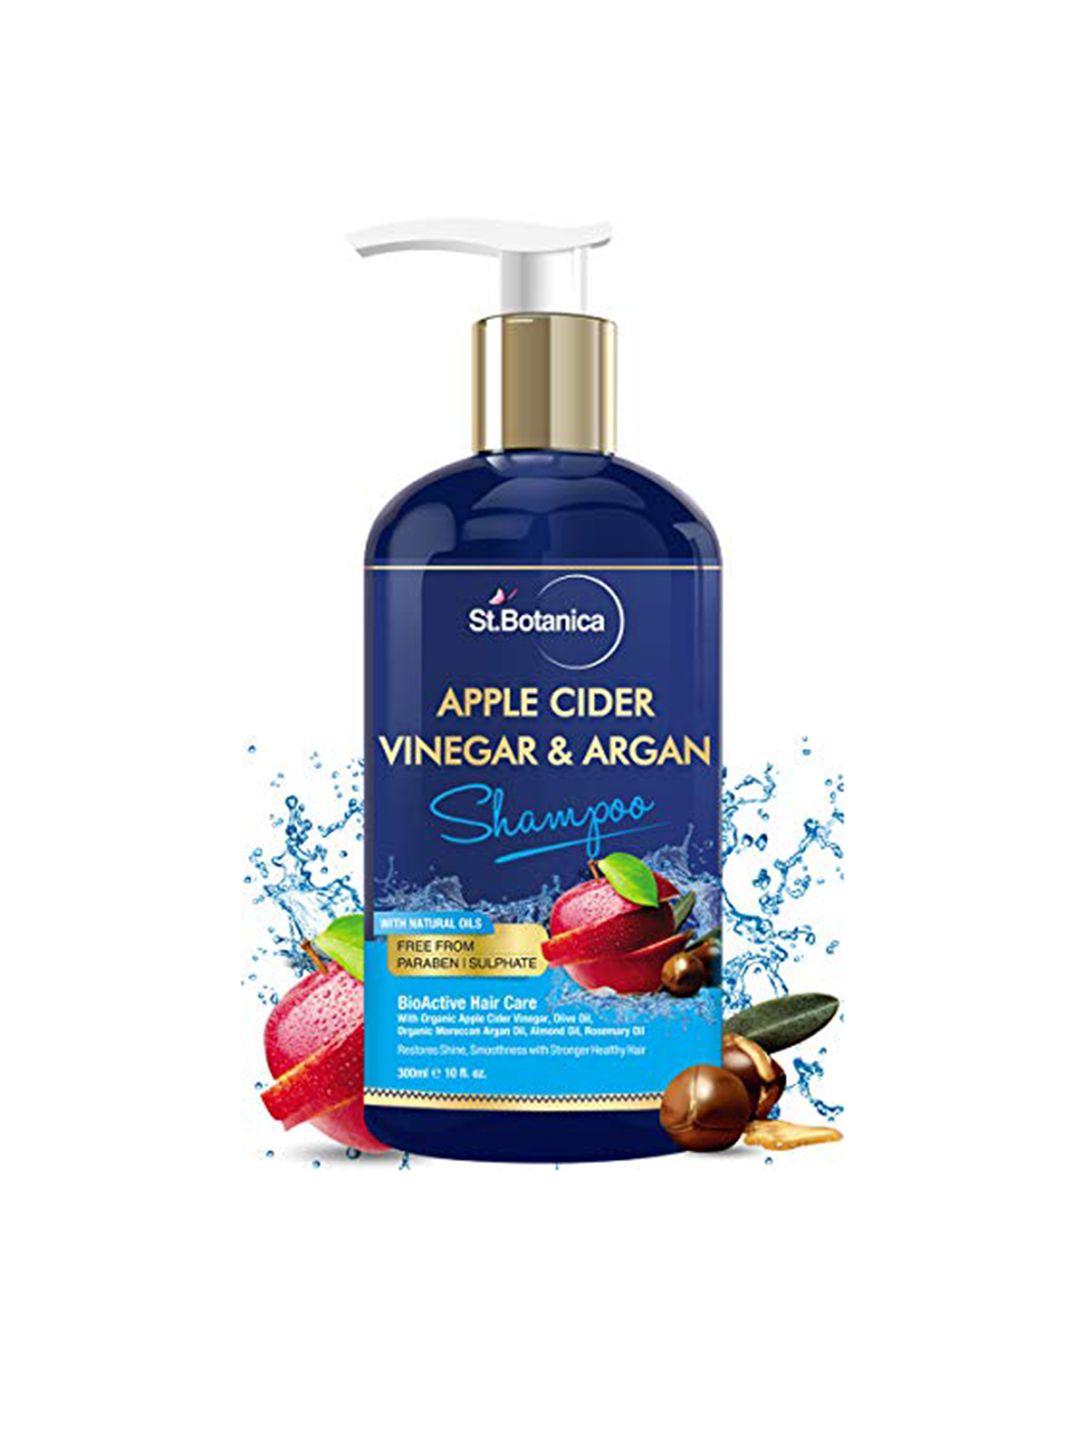 st.botanica apple cider vinegar & argan shampoo, 300 ml